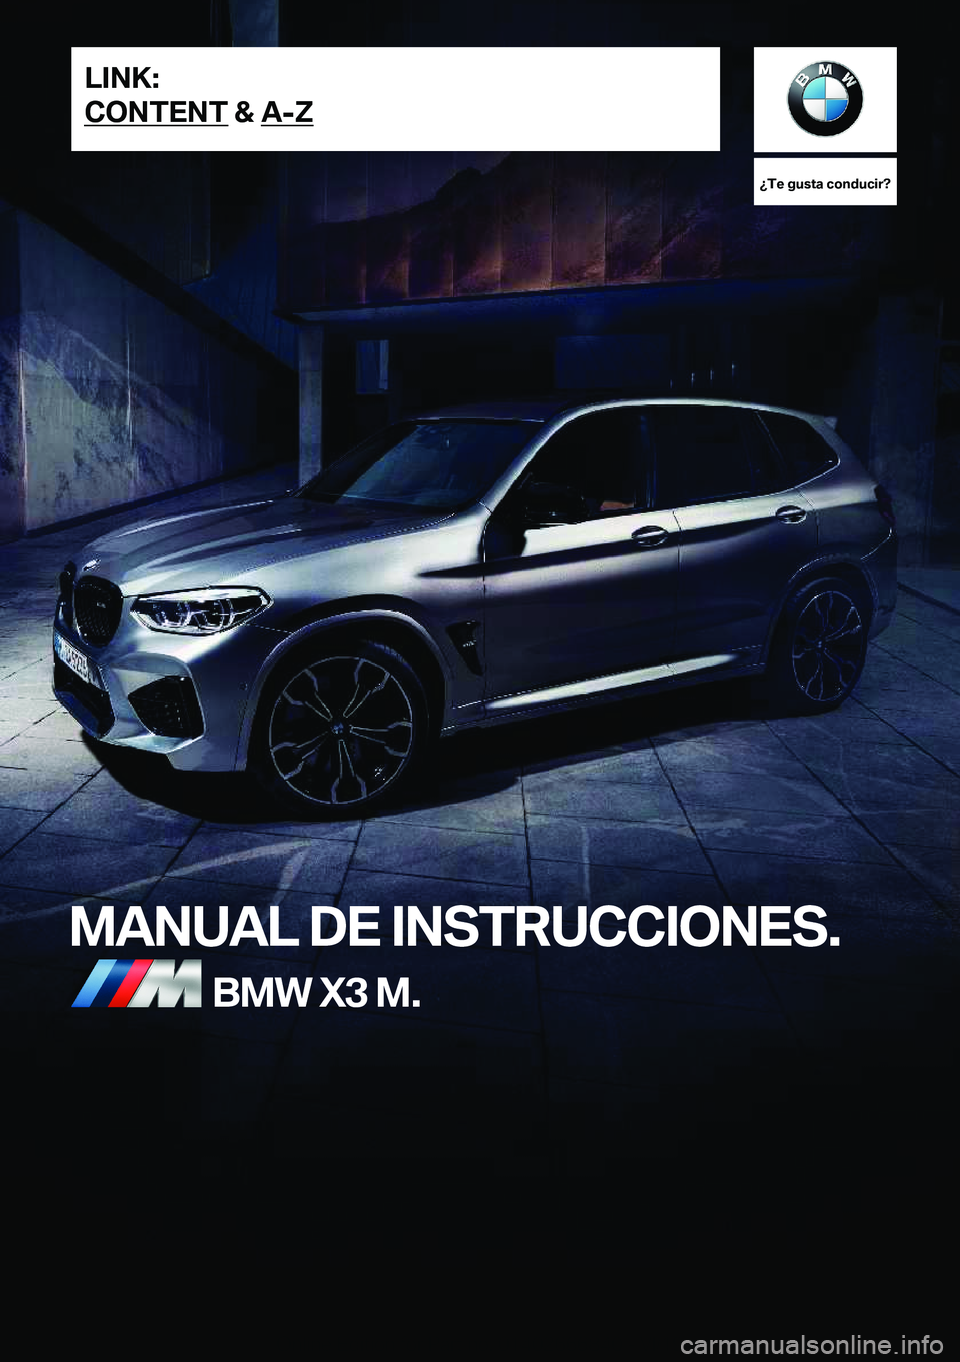 BMW X3 M 2020  Manuales de Empleo (in Spanish) ��T�e��g�u�s�t�a��c�o�n�d�u�c�i�r� 
�M�A�N�U�A�L��D�E��I�N�S�T�R�U�C�C�I�O�N�E�S�.�B�M�W��X�3��M�.�L�I�N�K�:
�C�O�N�T�E�N�T��&��A�-�Z�O�n�l�i�n�e��E�d�i�t�i�o�n��f�o�r��P�a�r�t��n�o�.��0